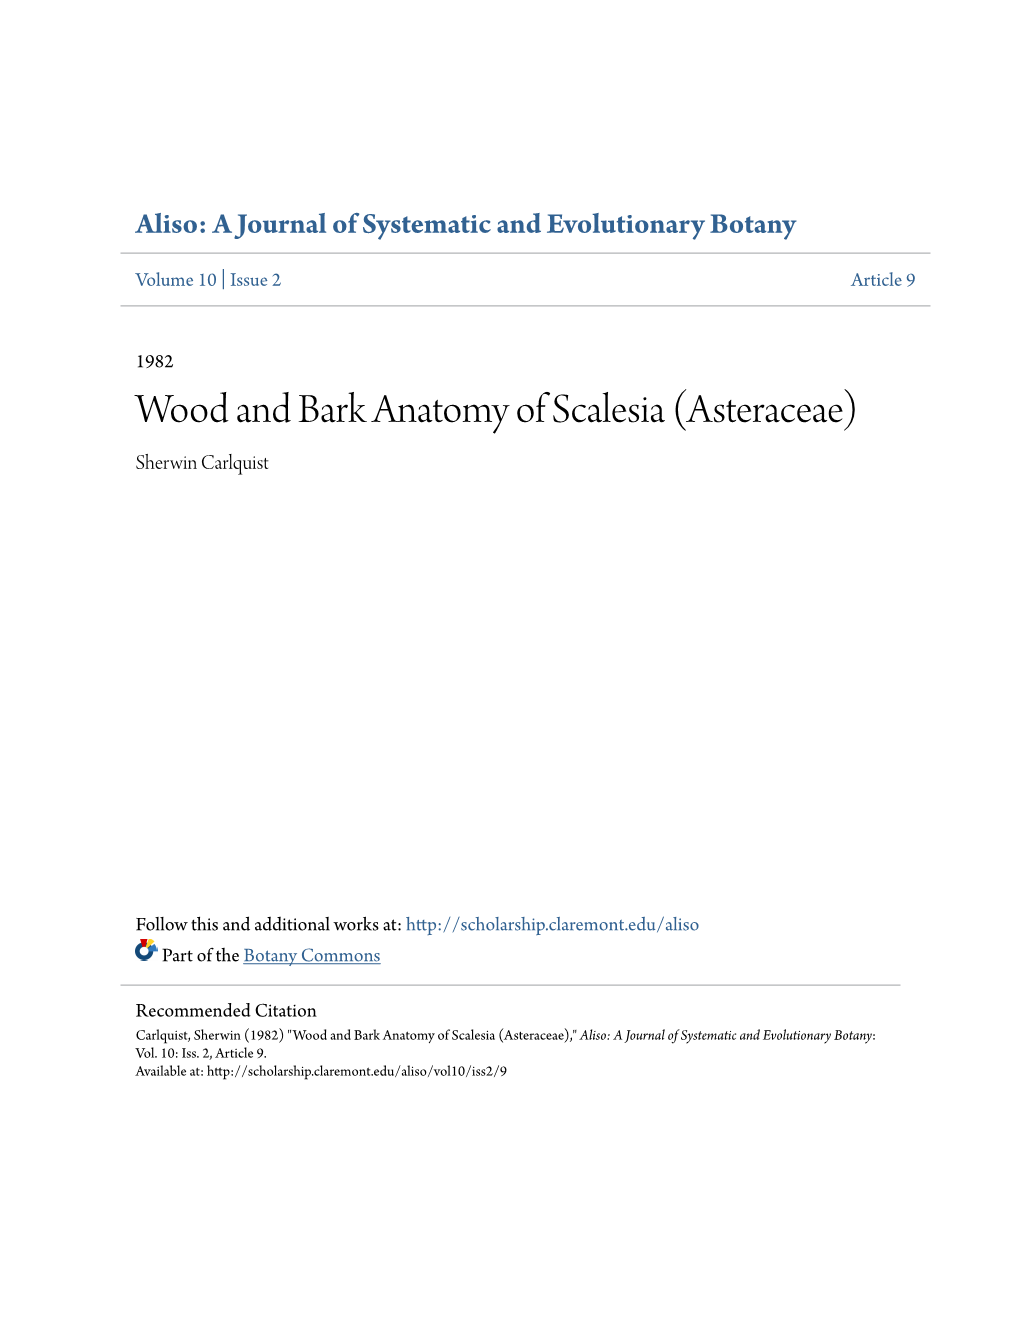 Wood and Bark Anatomy of Scalesia (Asteraceae) Sherwin Carlquist